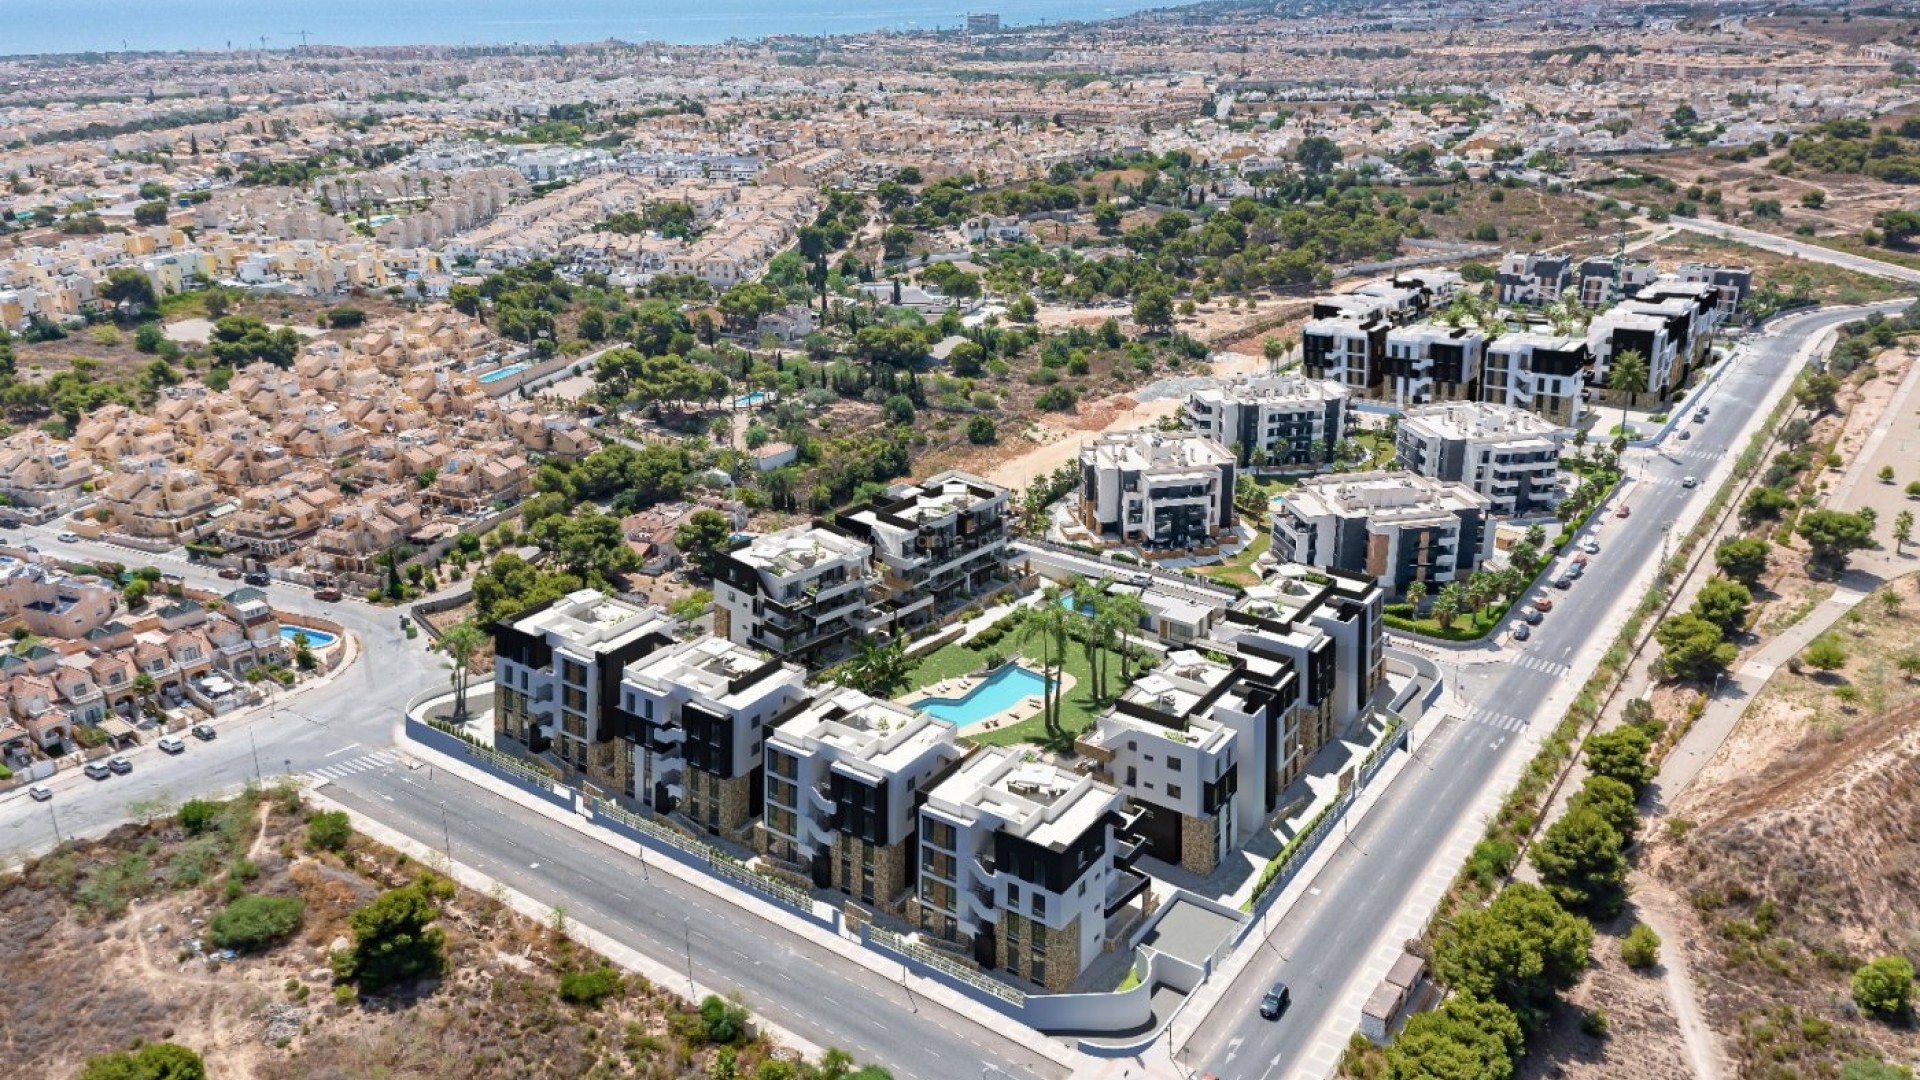 Residential complex of modern apartments/penthouses in Los Altos, Orihuela Costa, 2 bedrooms, 2 bathrooms, garden or terrace or private solarium.